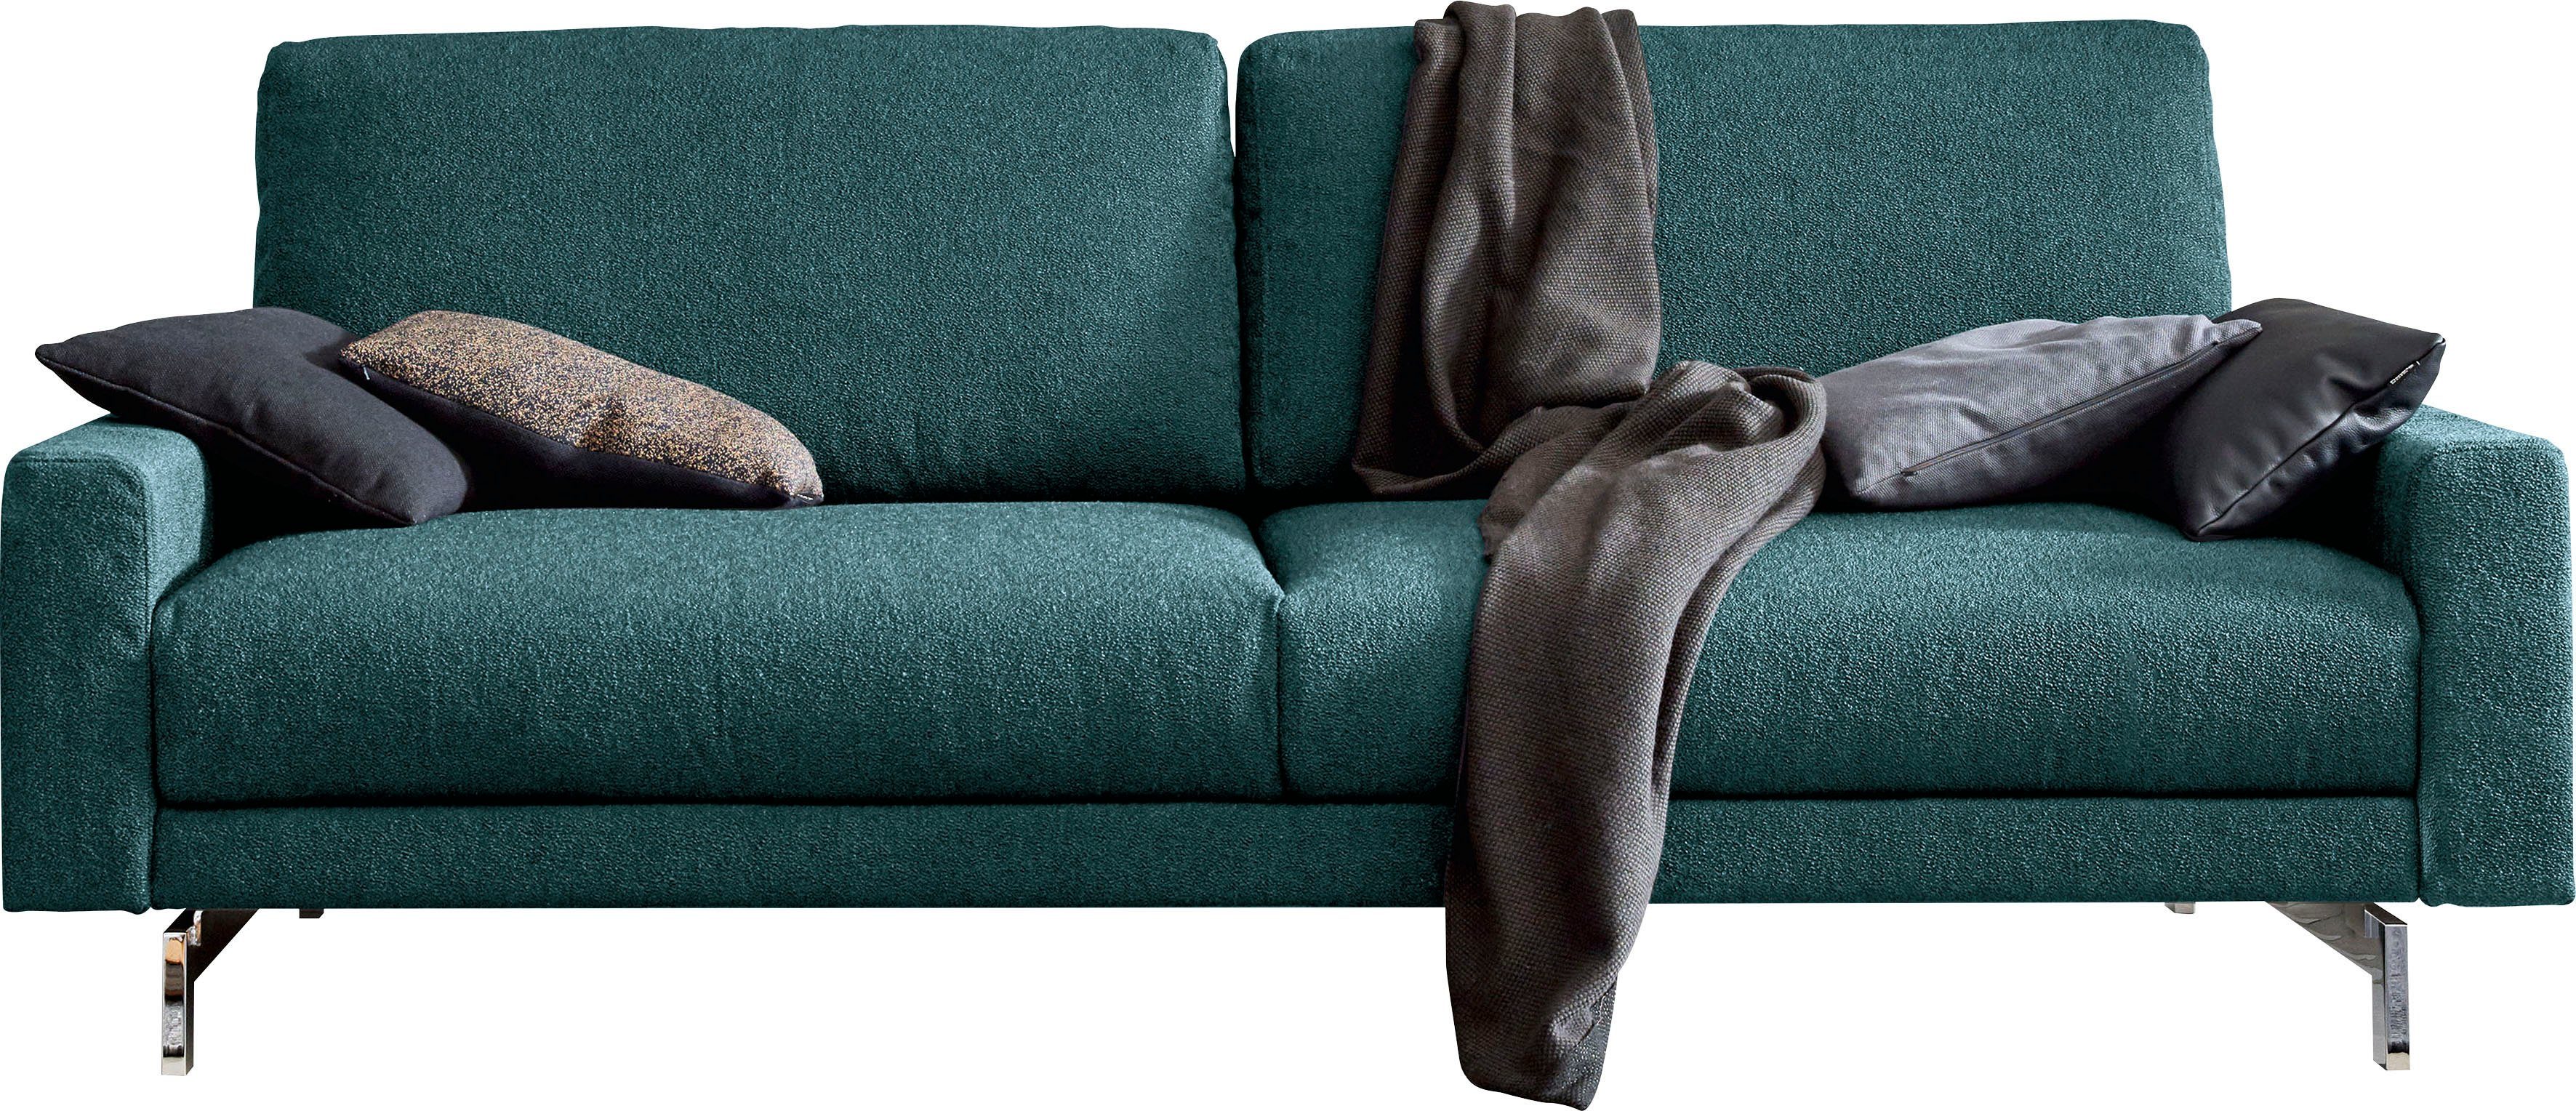 164 2-Sitzer Armlehne glänzend, Fuß Breite hülsta sofa hs.450, cm niedrig, chromfarben